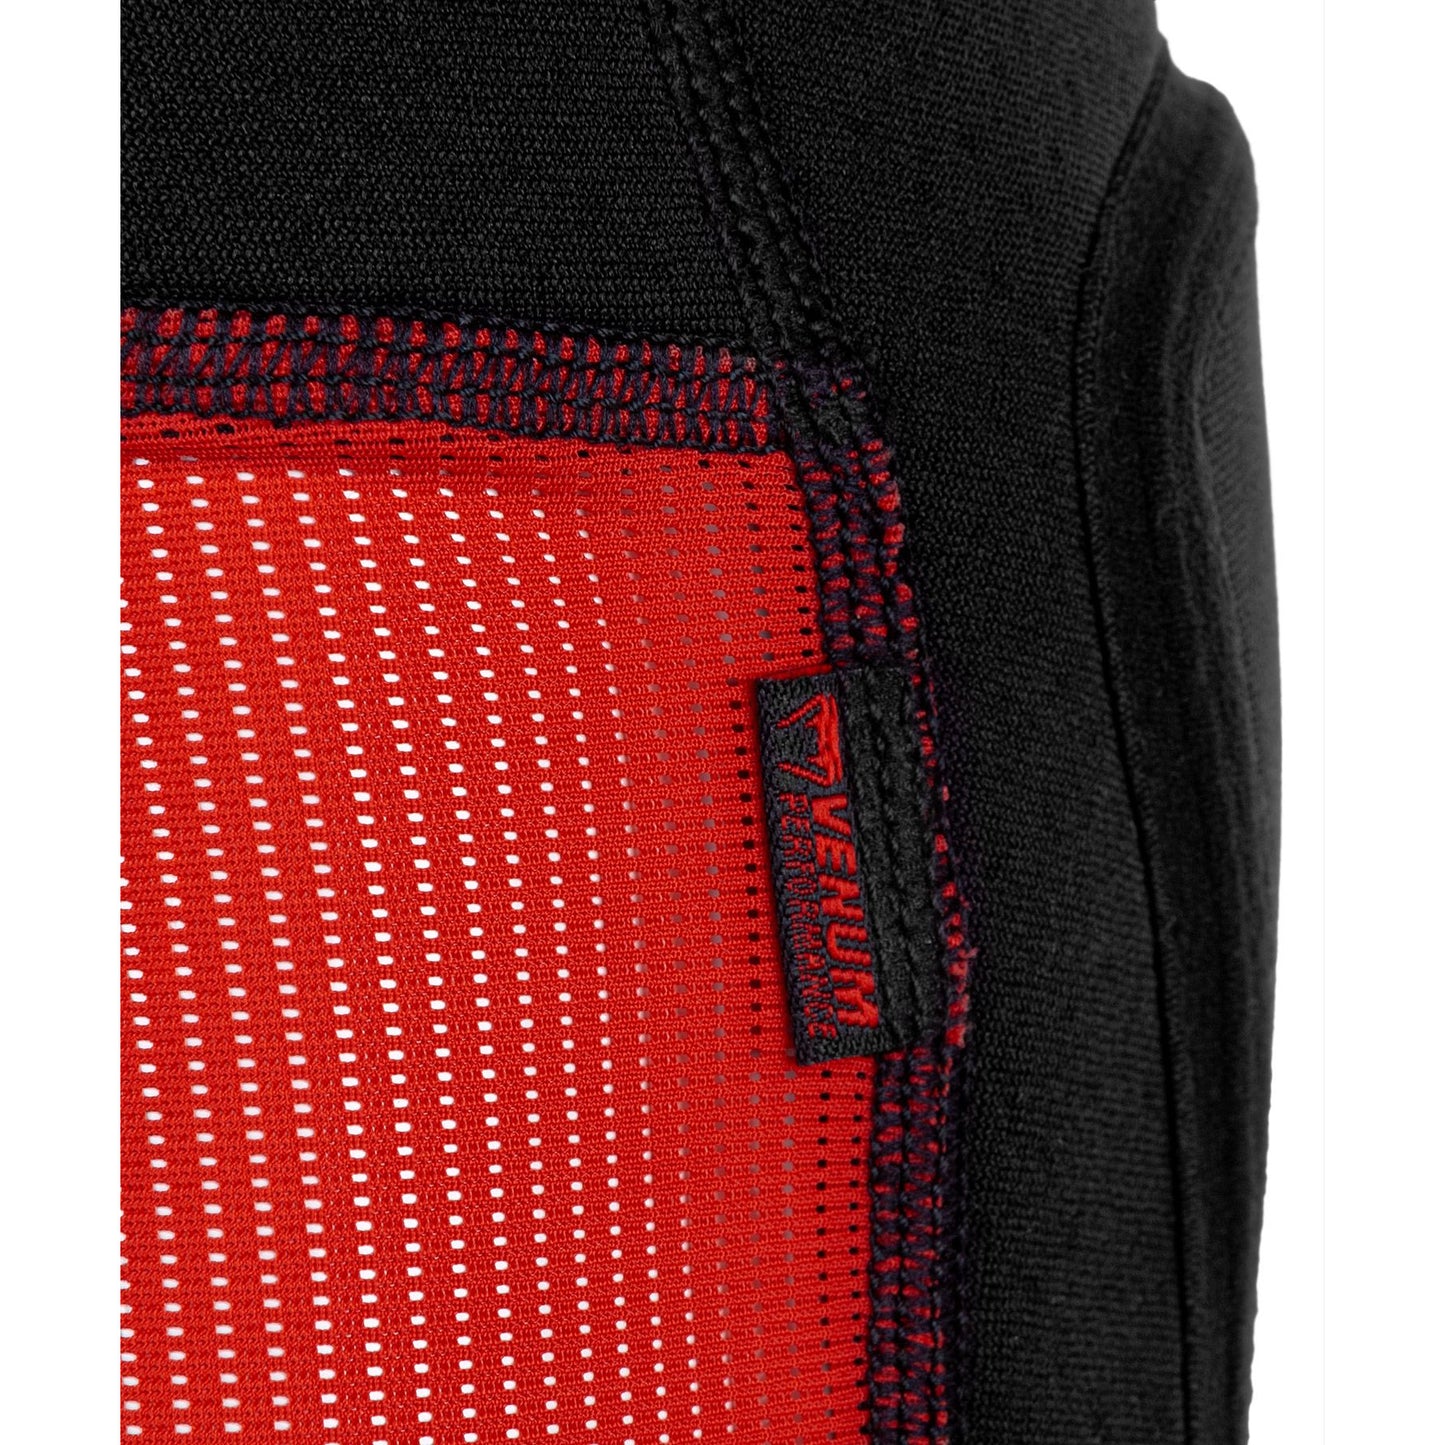 Venum Kontact Evo Knee Pads - Black/Red